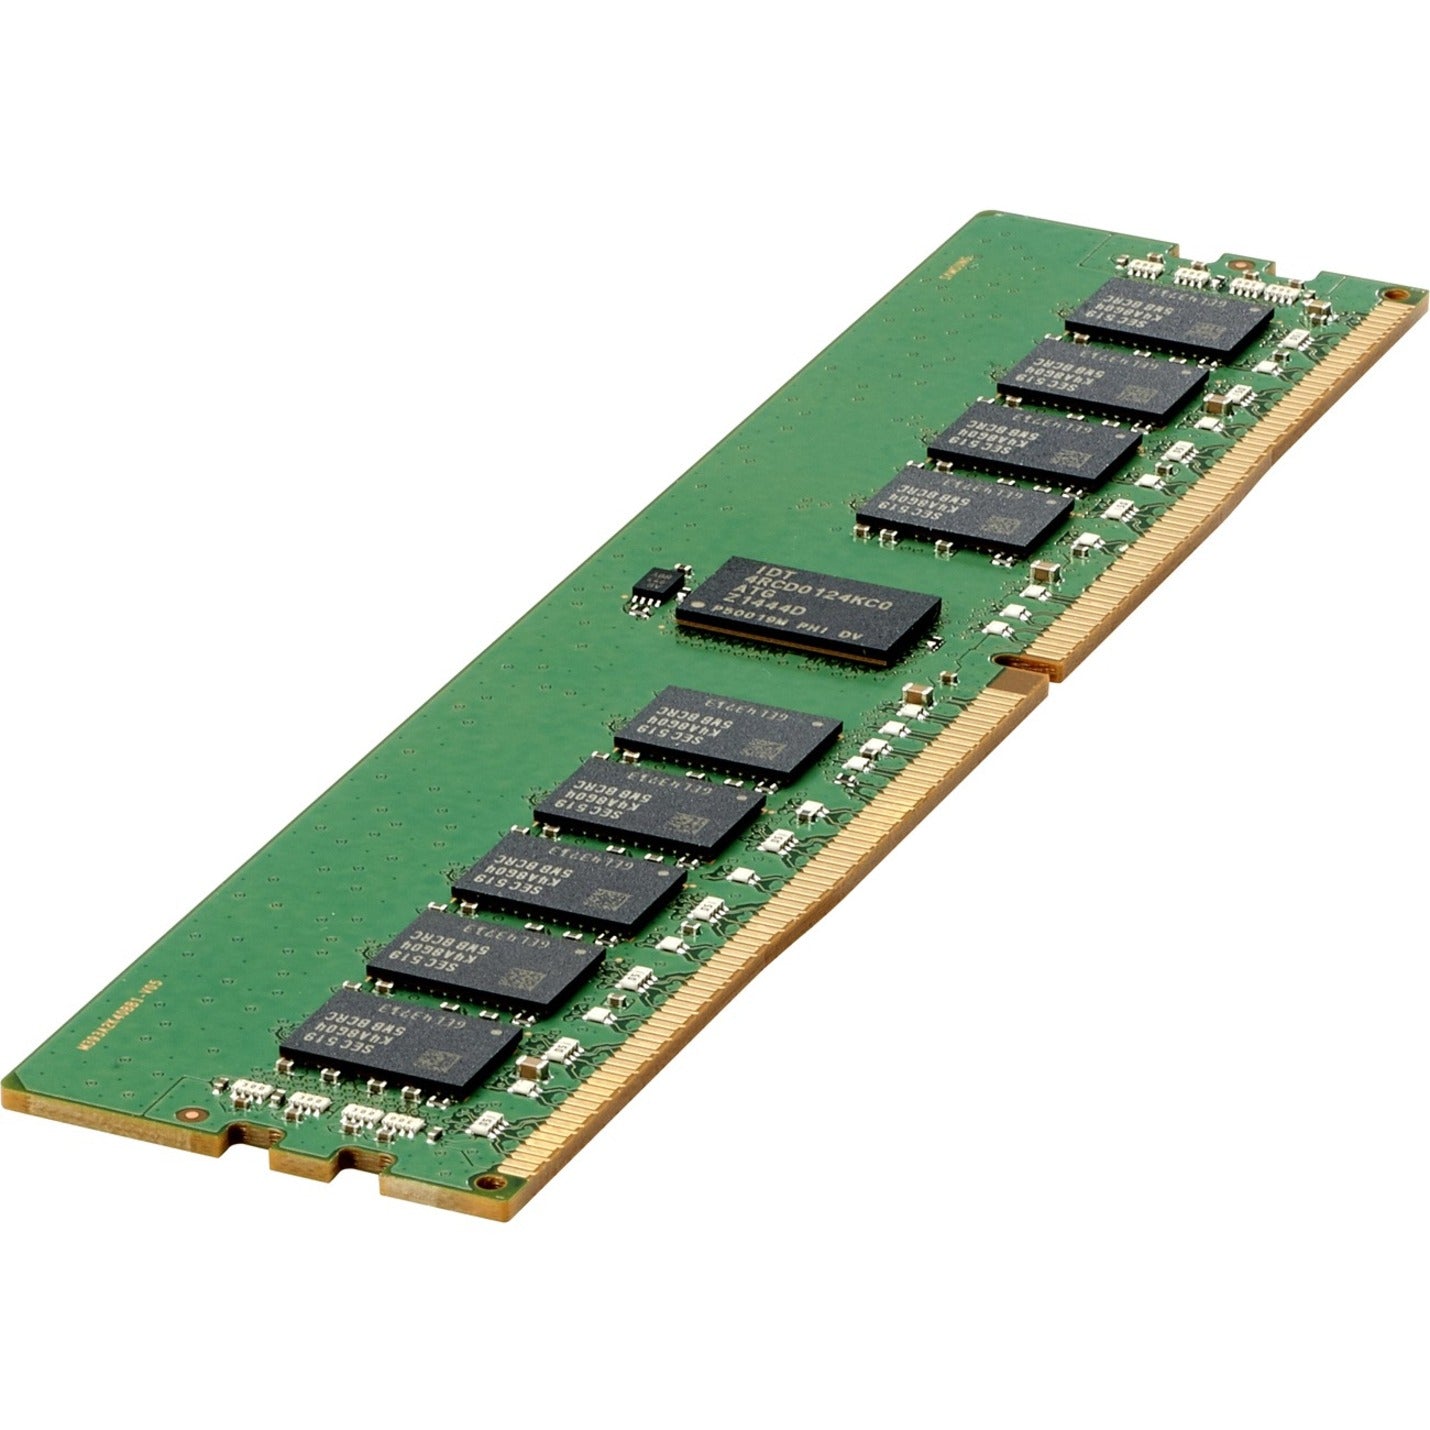 HPE P06035-B21 SmartMemory 64GB DDR4 SDRAM Memory Module, High Performance RAM for Servers